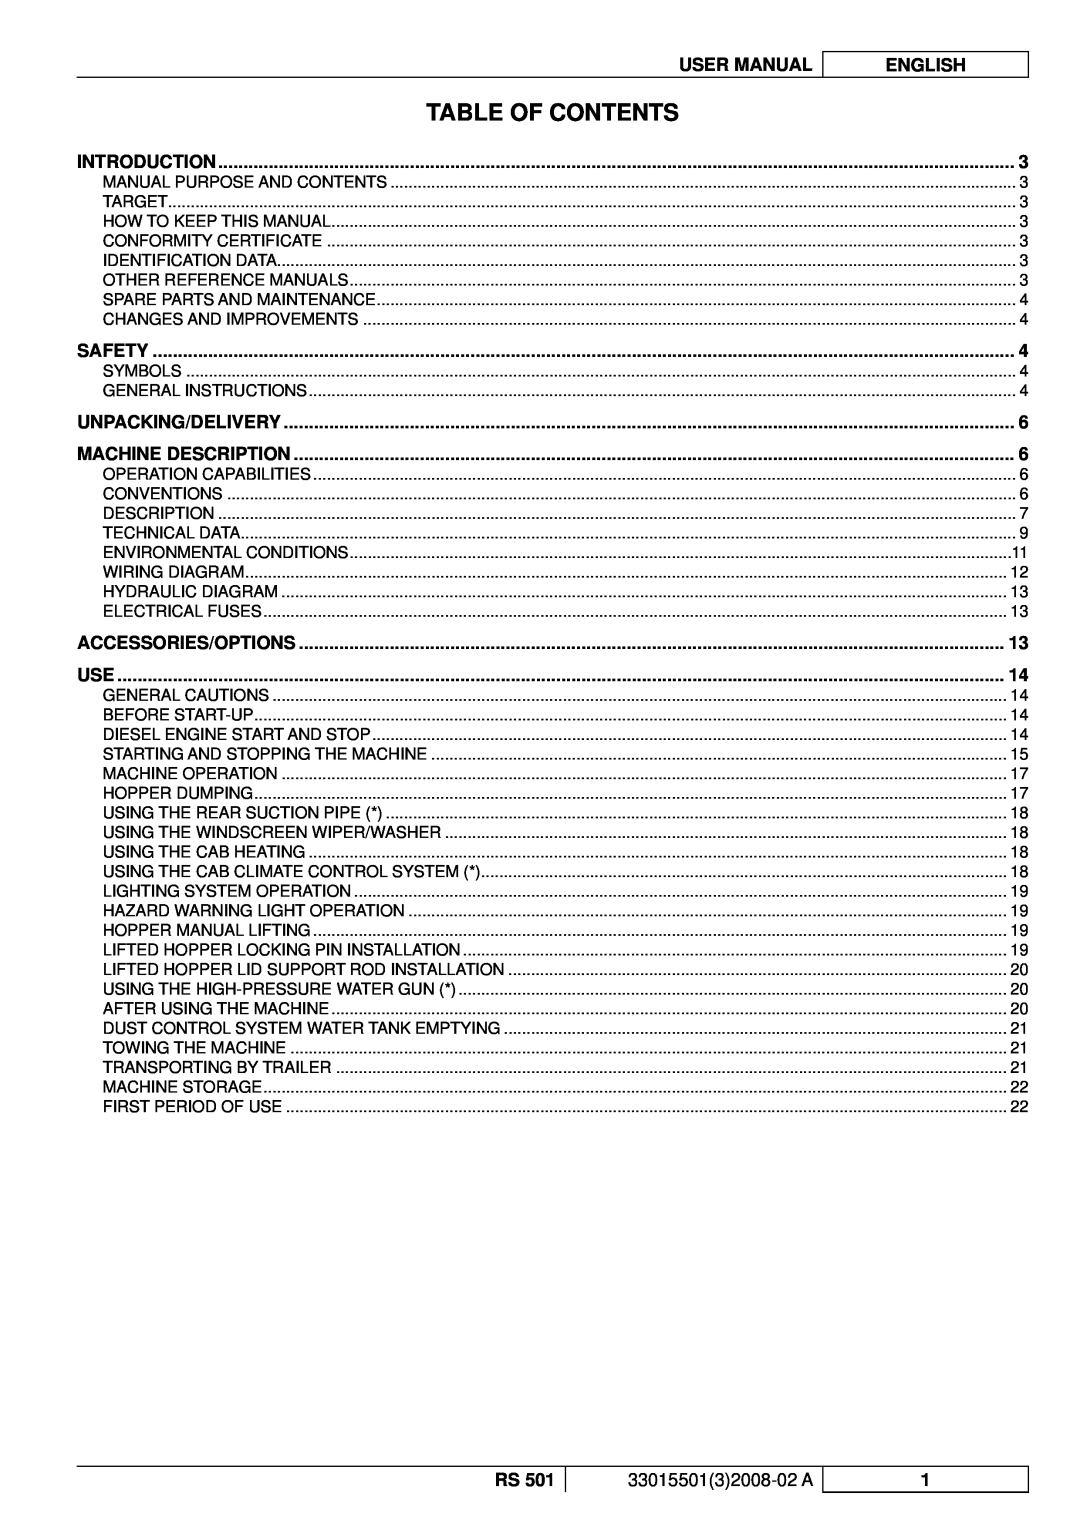 Nilfisk-ALTO RS 501 manuel dutilisation Table Of Contents, User Manual, English 